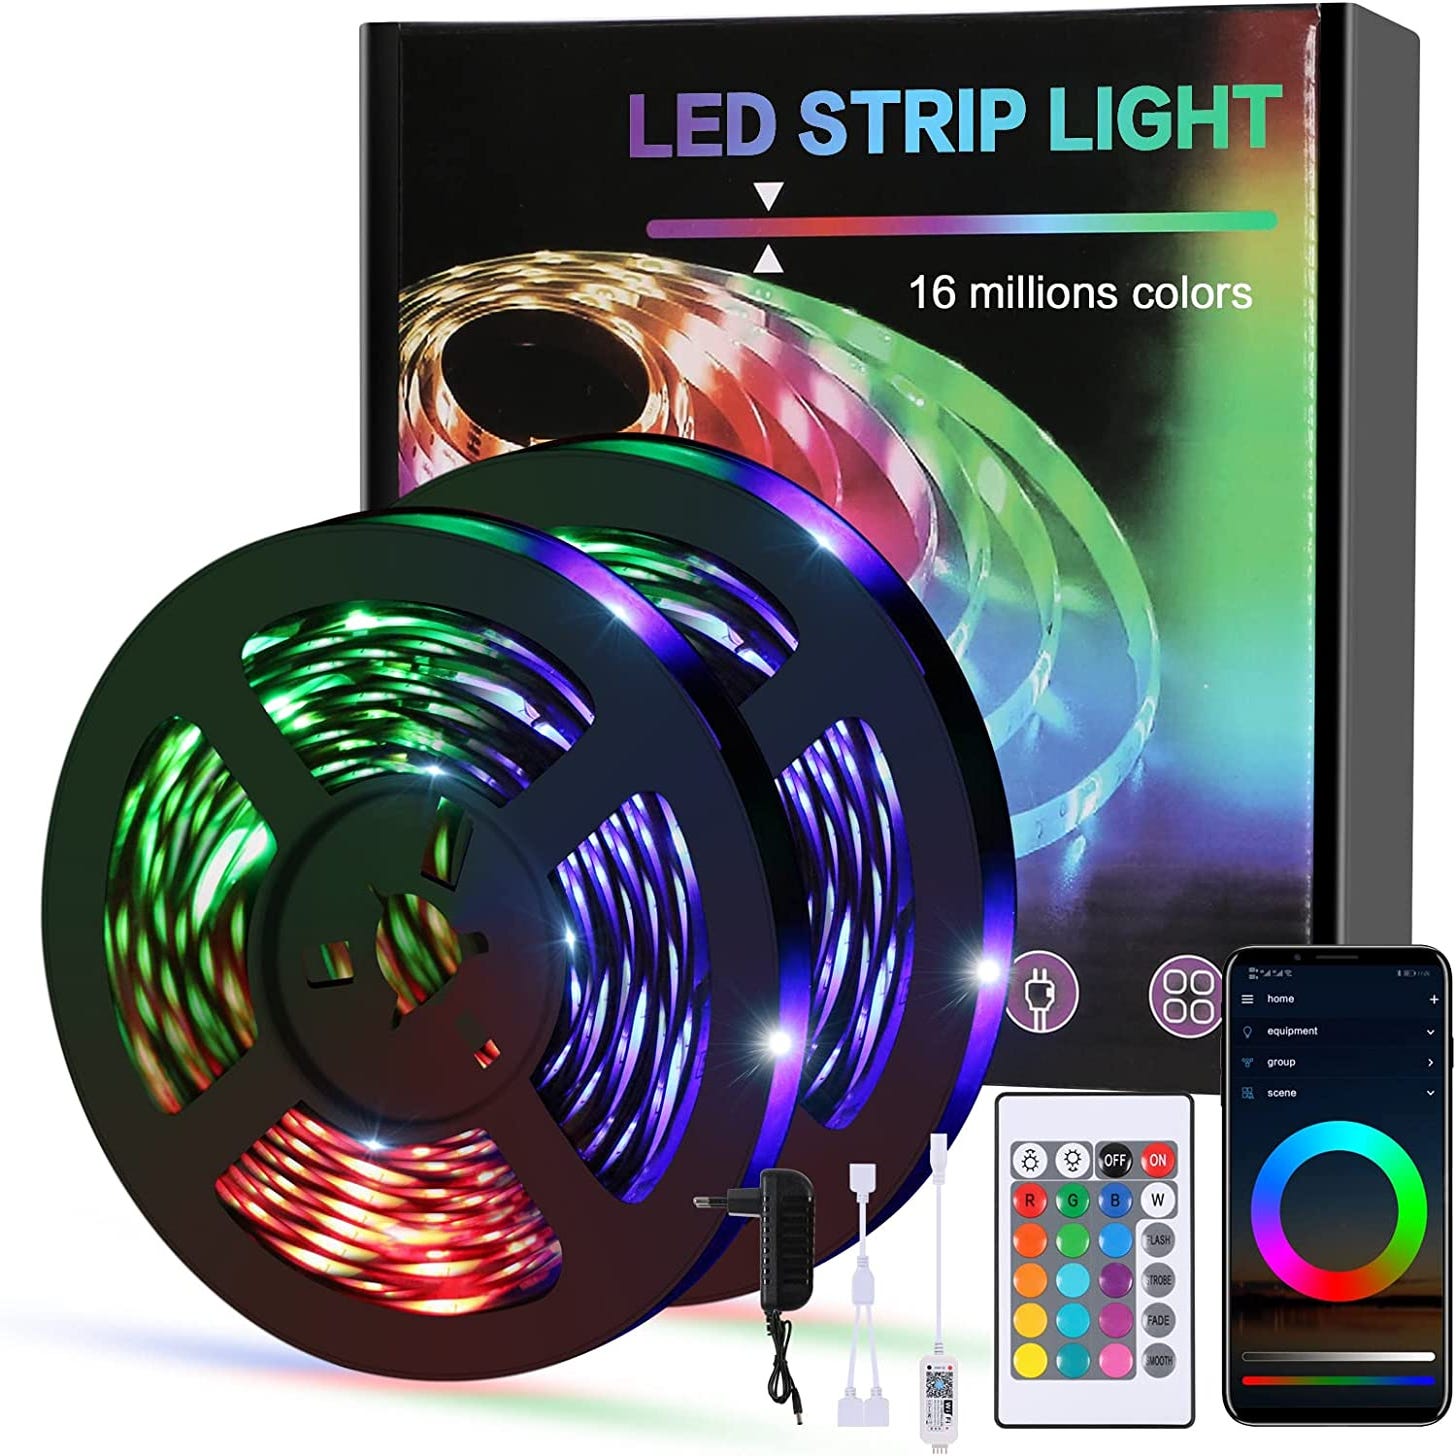 Ruban LED 5M, TASMOR Bande LED RGB Multicolore Musical avec Télécommande,  Bandeau LED